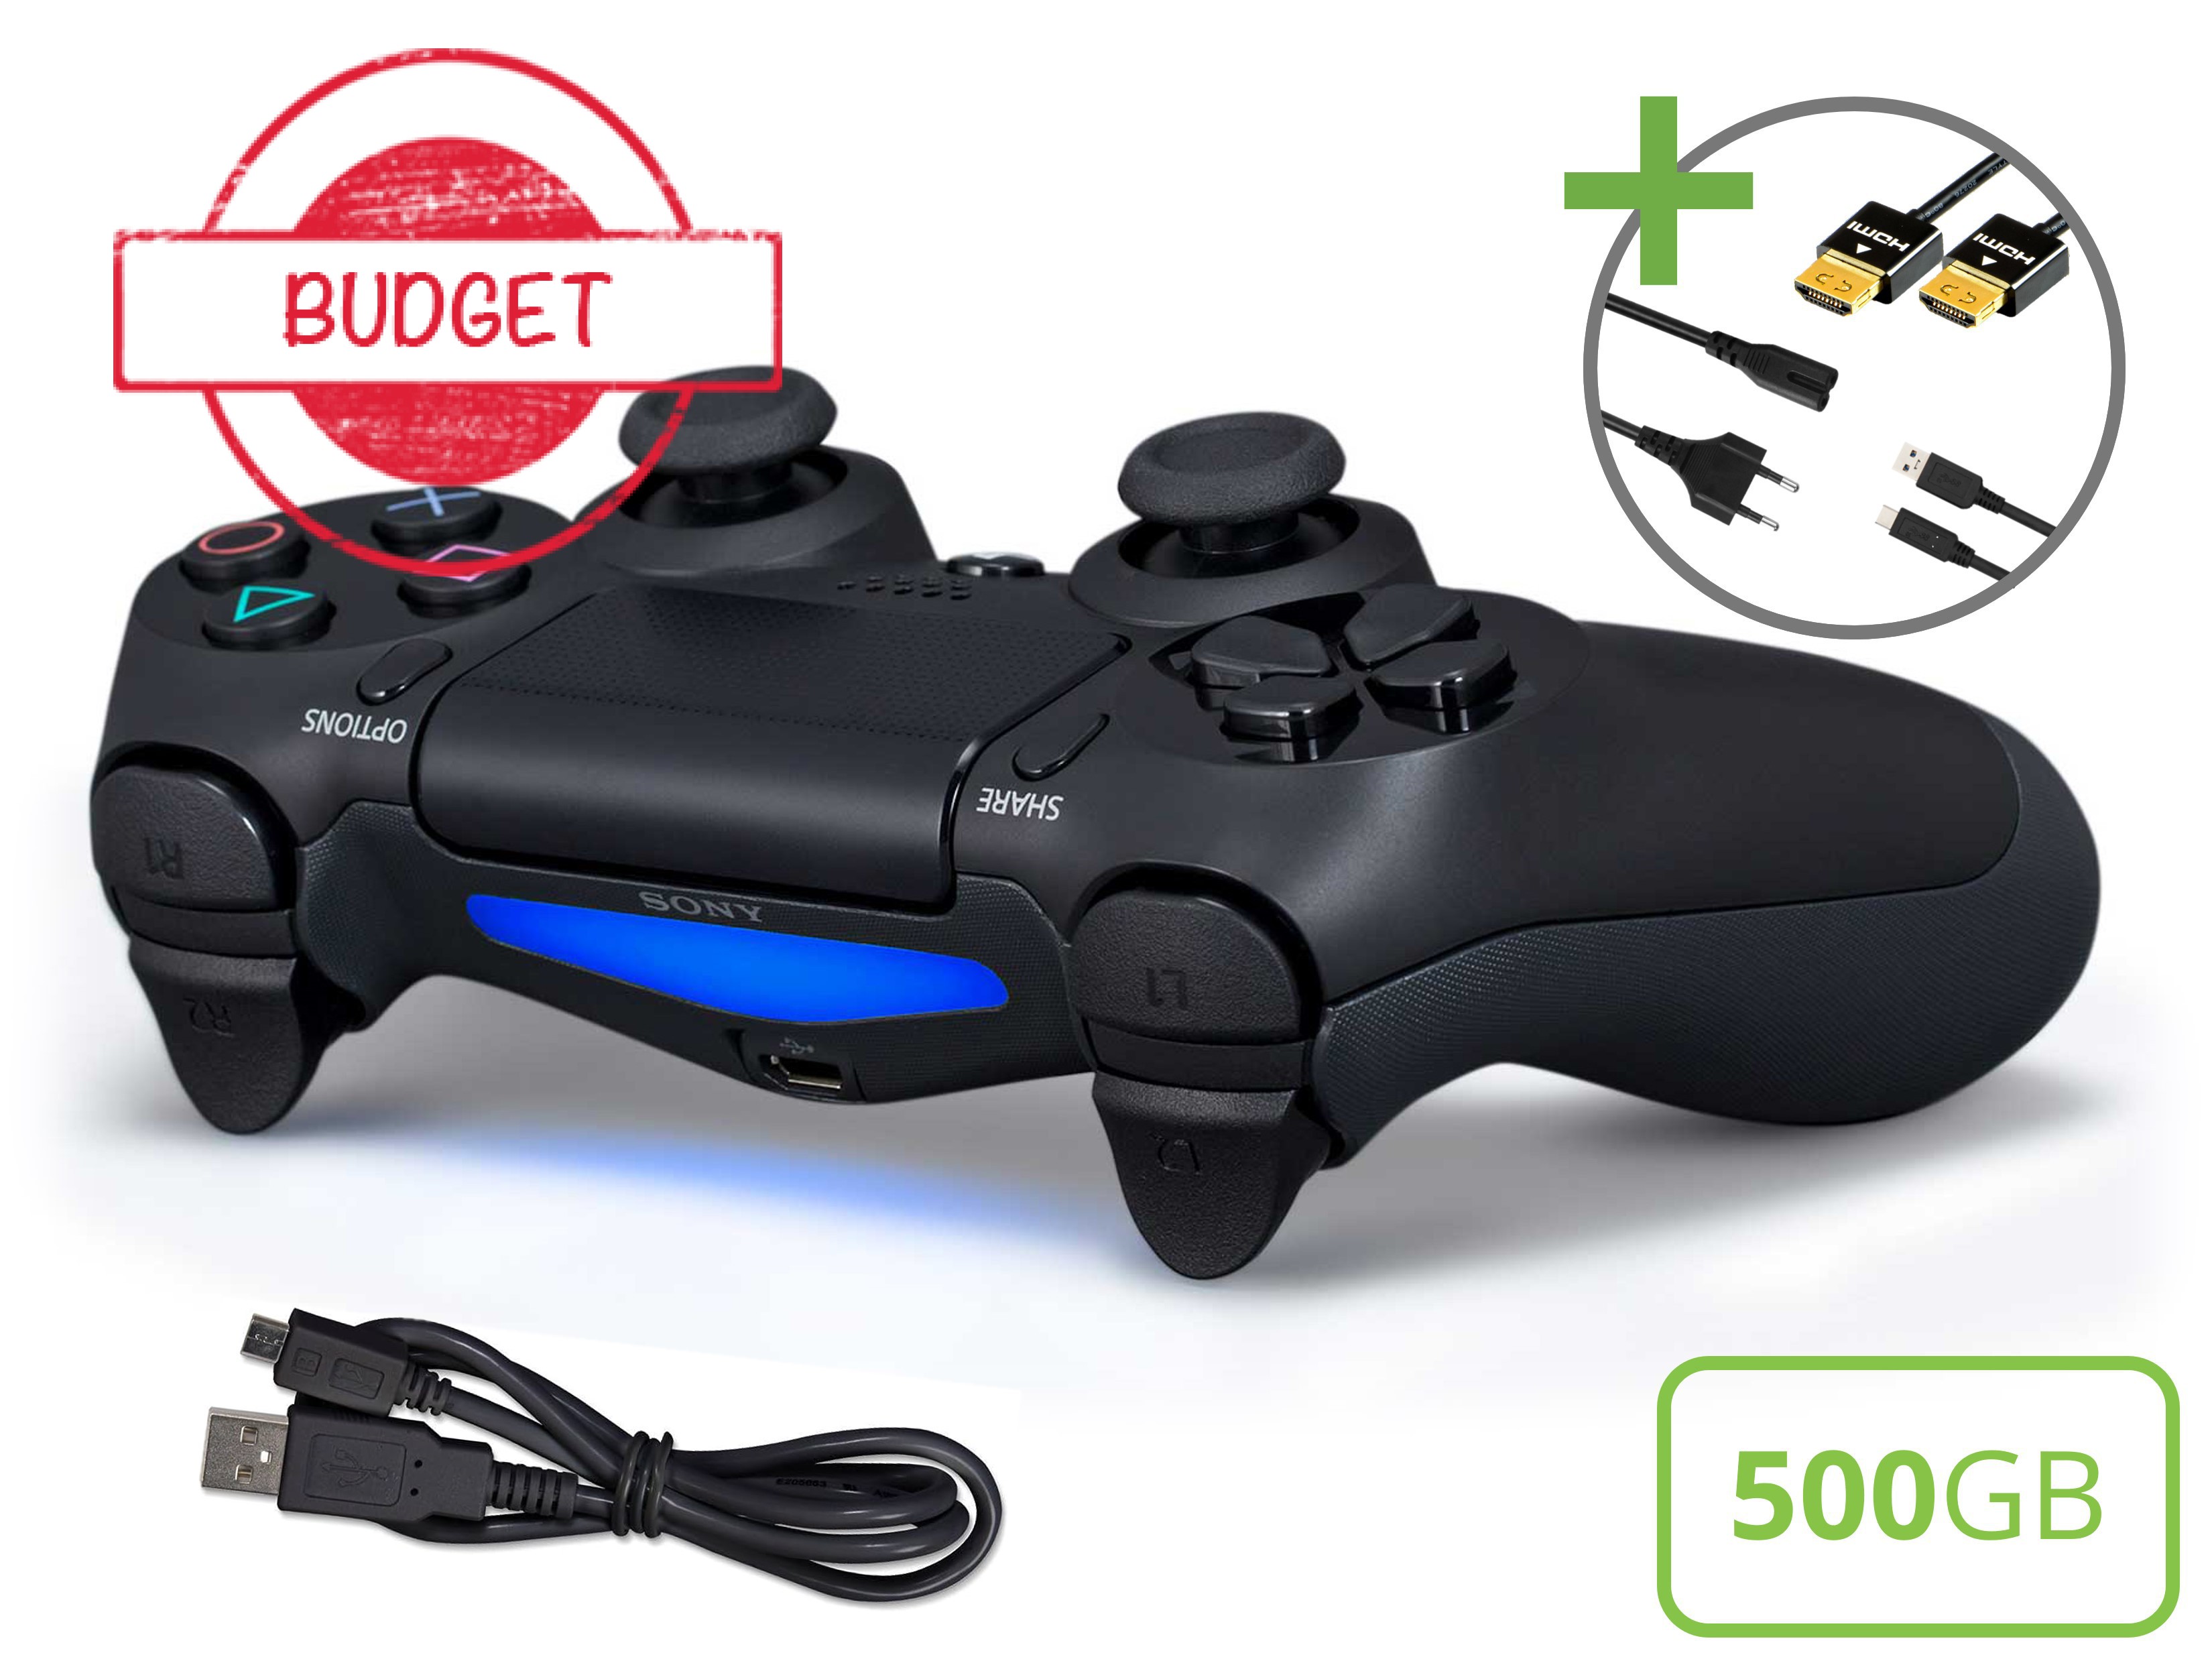 Sony PlayStation 4 Starter Pack - 500GB DualShock V1 Edition - Budget - Playstation 4 Hardware - 4